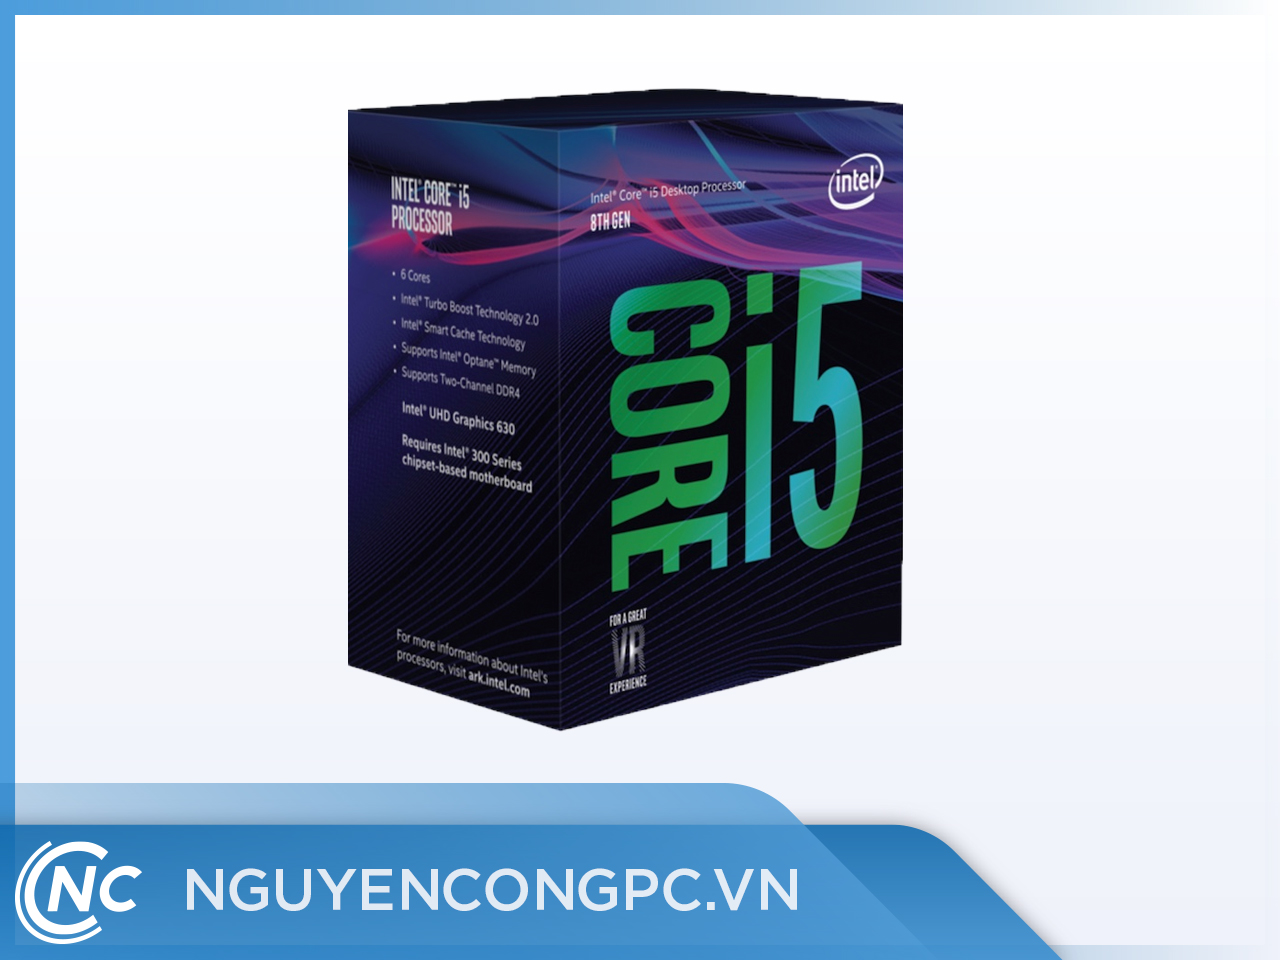 Intel Core i5-8400. Intel Core i5-8600. Intel Core i5-8400 lga1151 v2, 6 x 2800 МГЦ. 8600k.